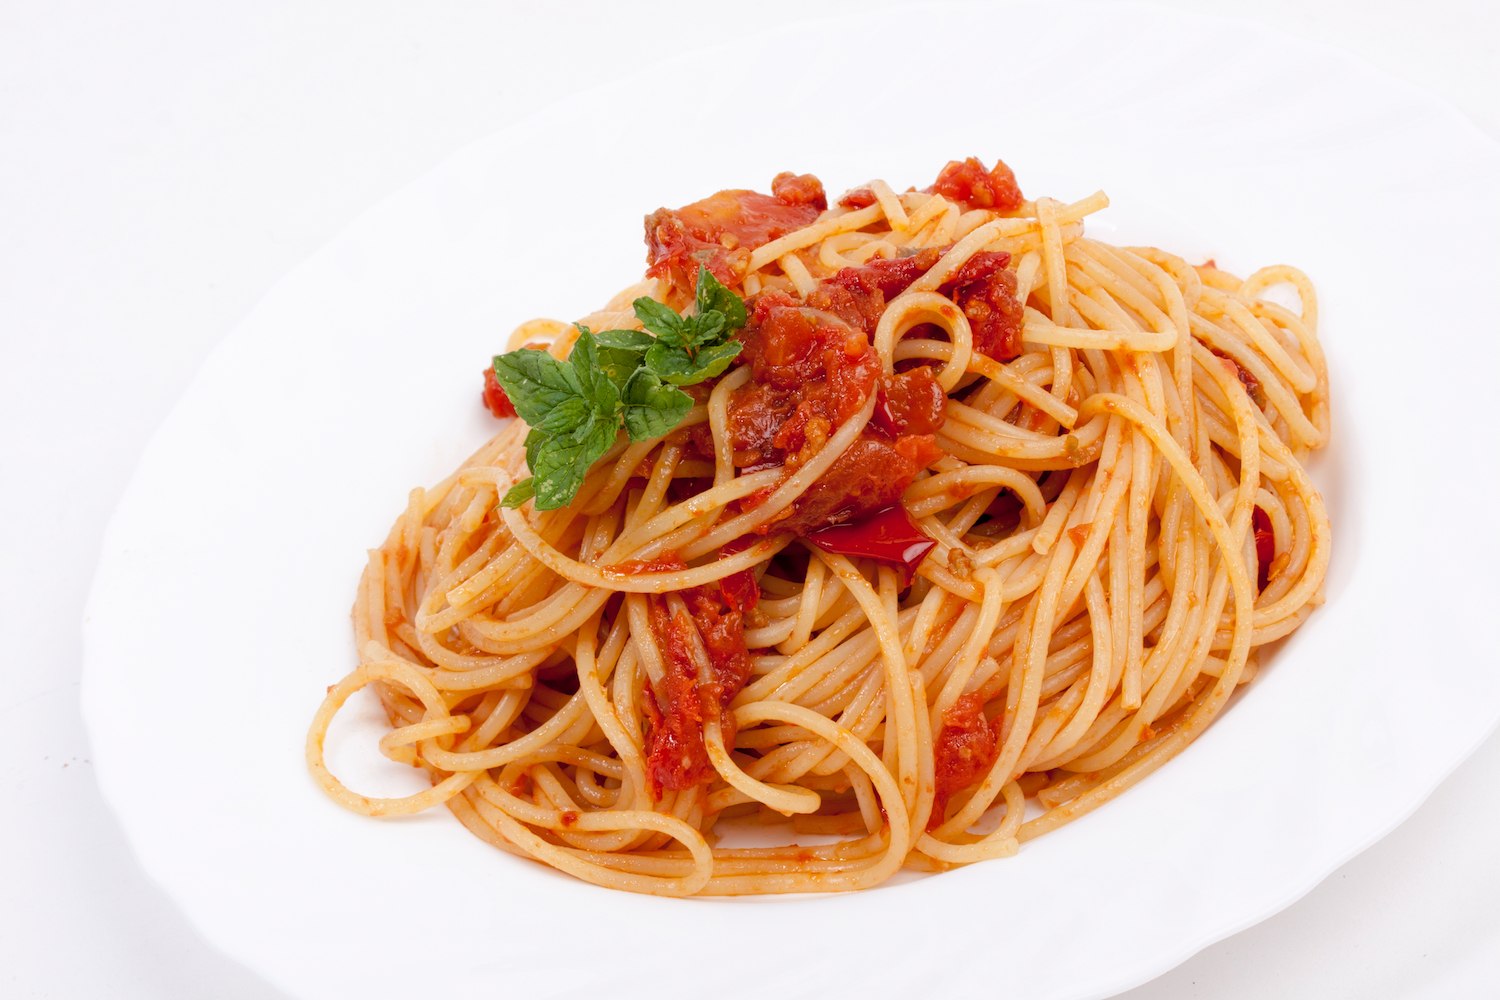 Some spaghetti. Спагетти. Спагетти болоньезе. Паста болоньезе. Паста болоньезе с сыром.